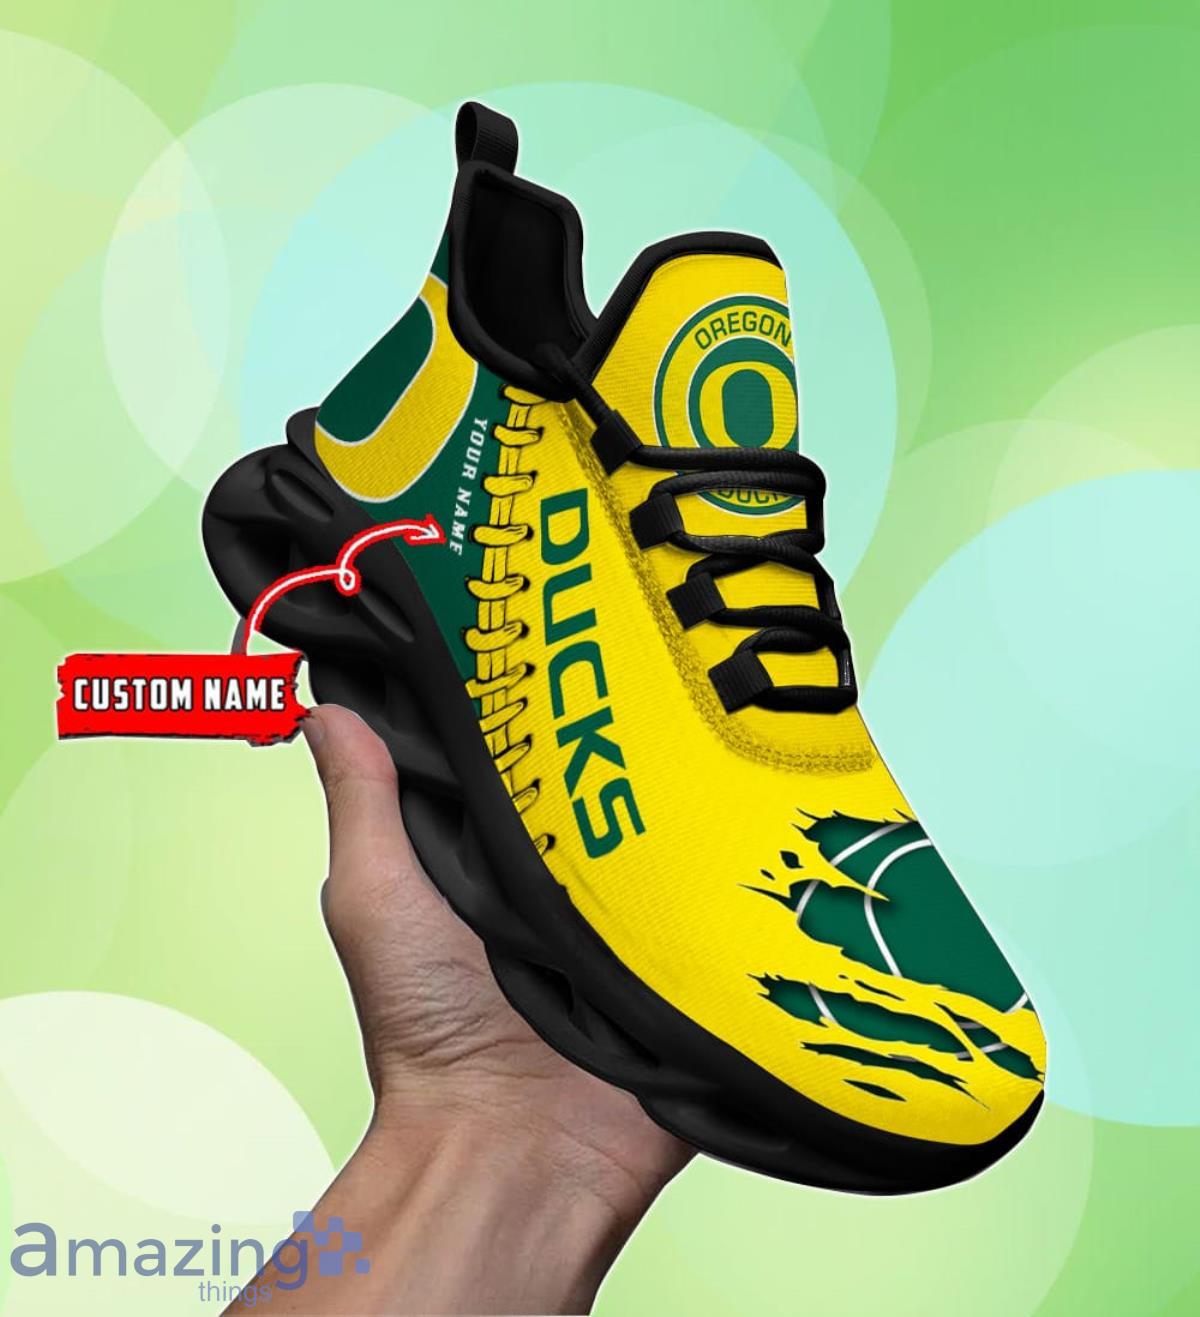 Oregon Ducks Personalized Max Soul Shoes Unique Gift For Men And Women Fans Product Photo 1